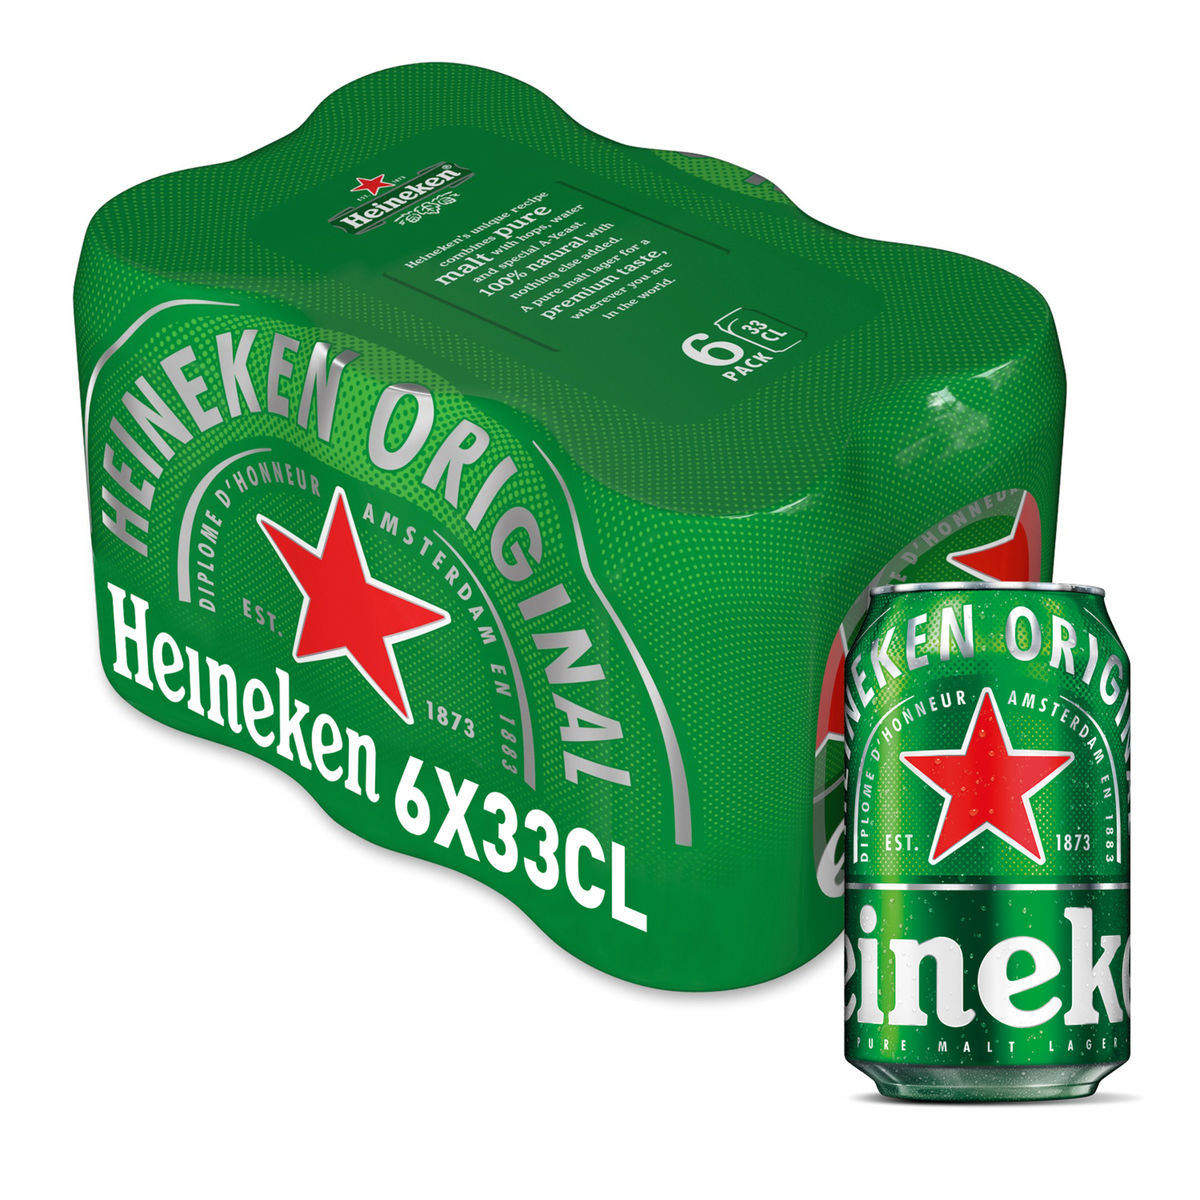 Heineken Canettes 6 x 33 cl